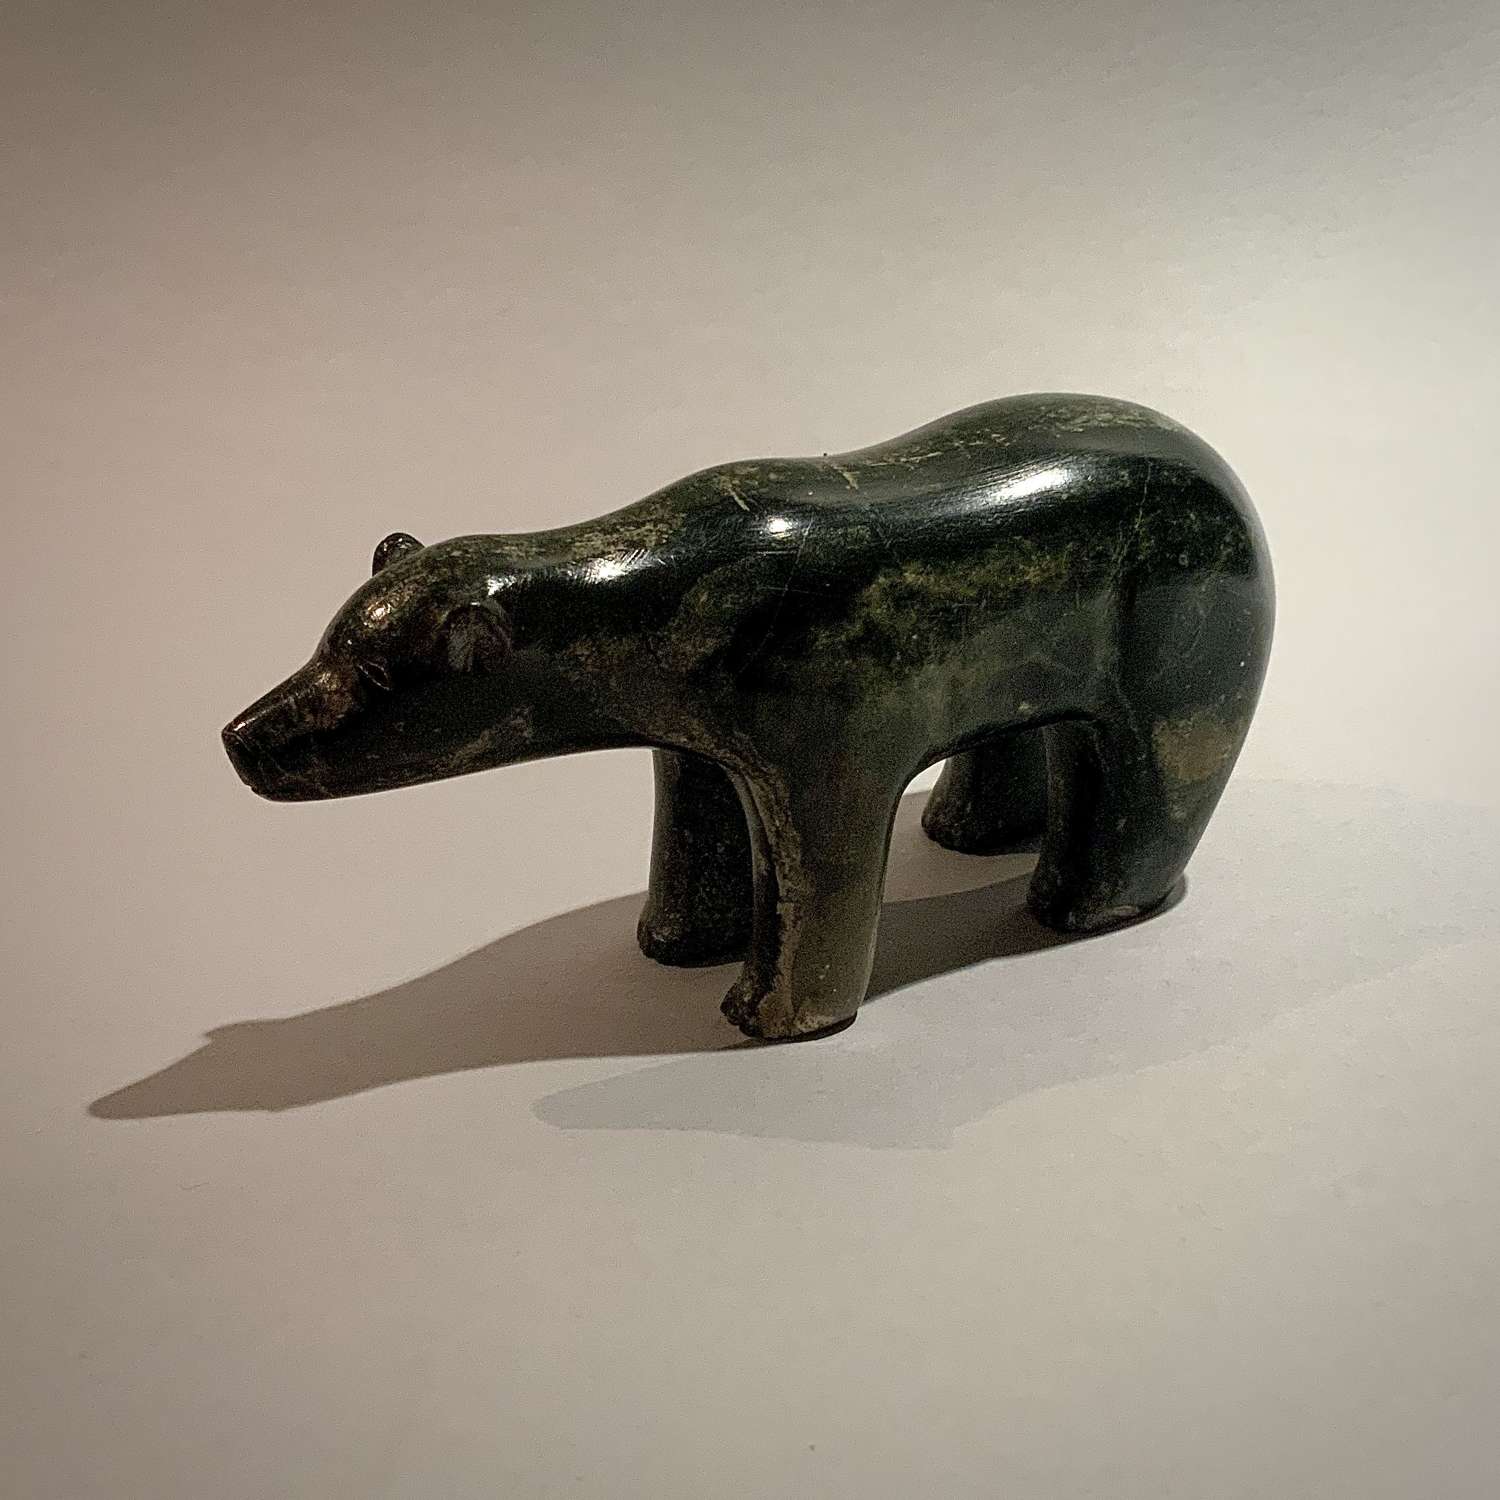 Carved “Polar Bear” Sculpture by Inuit Artist 'Haodlon' (20th Century)